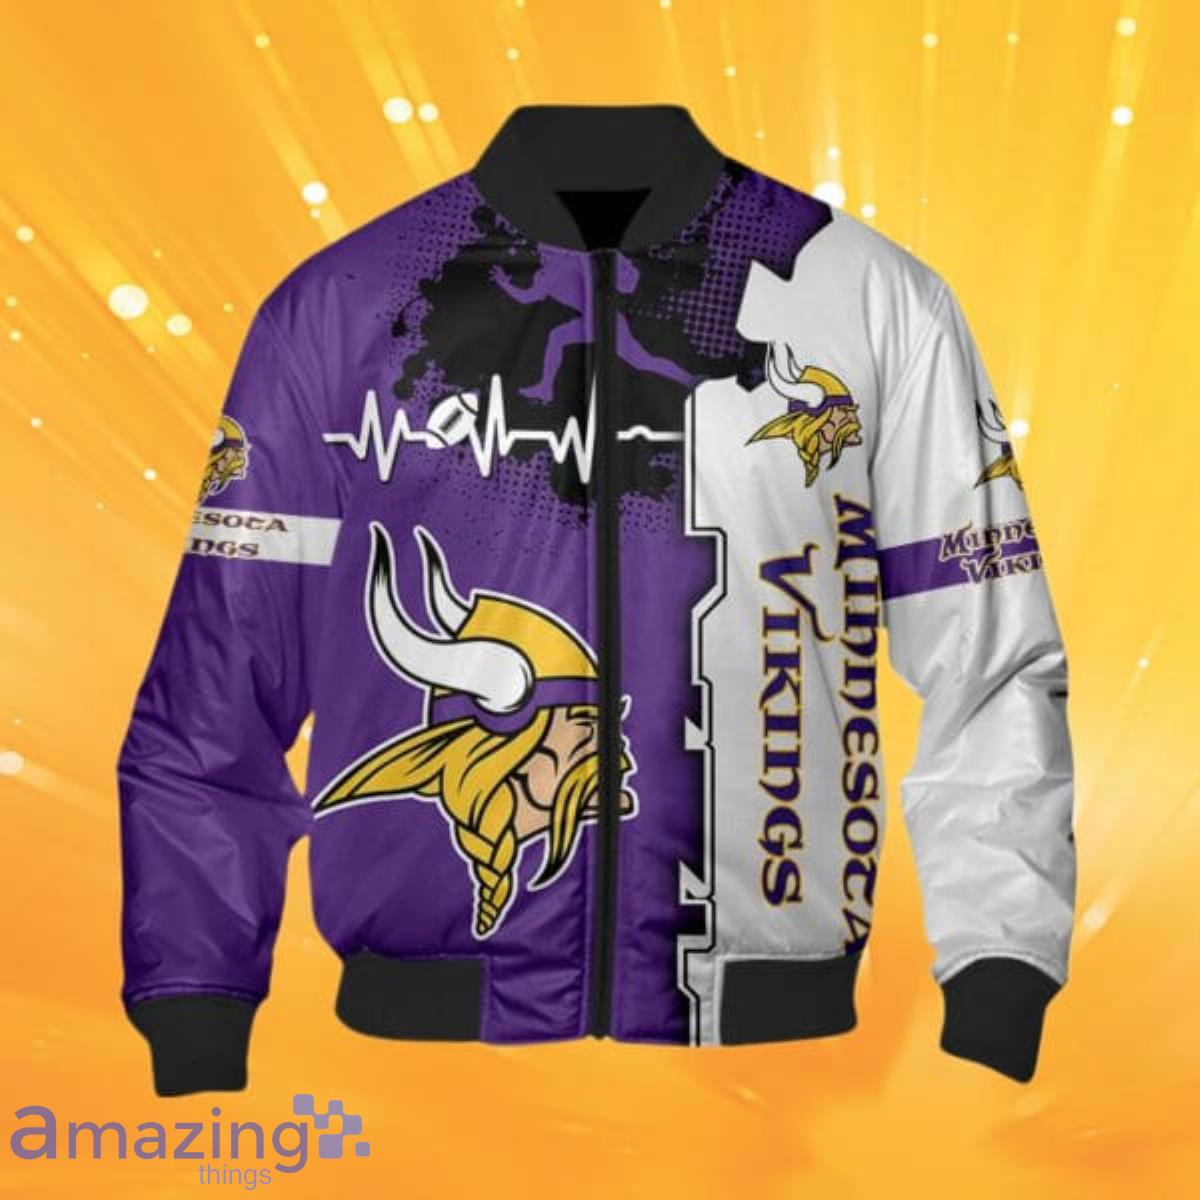 Minnesota Vikings NFL Bomber Jacket Style Gift For Fans Product Photo 1